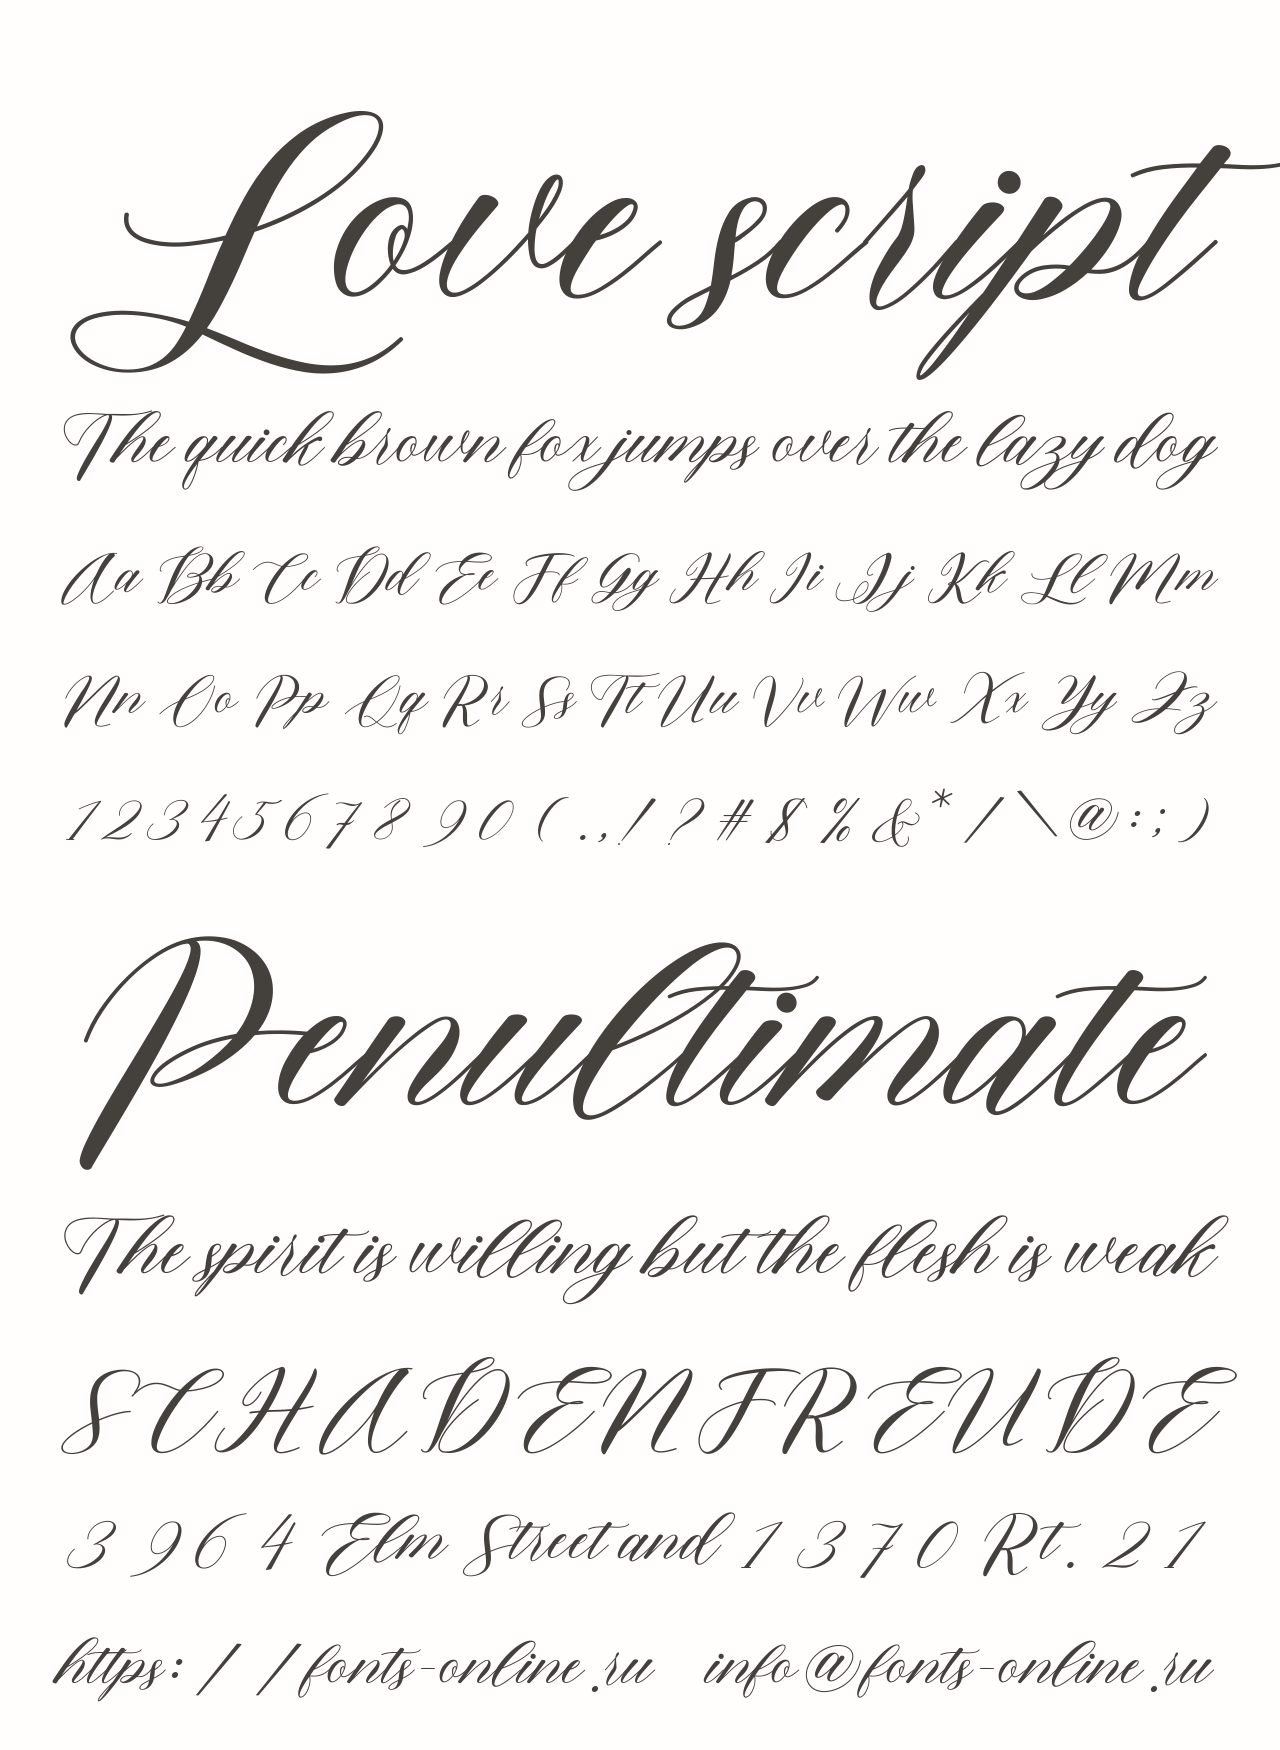 Scripted love. Love шрифт. Любовь шрифт. Любовь шрифт на русском. Love me шрифт.